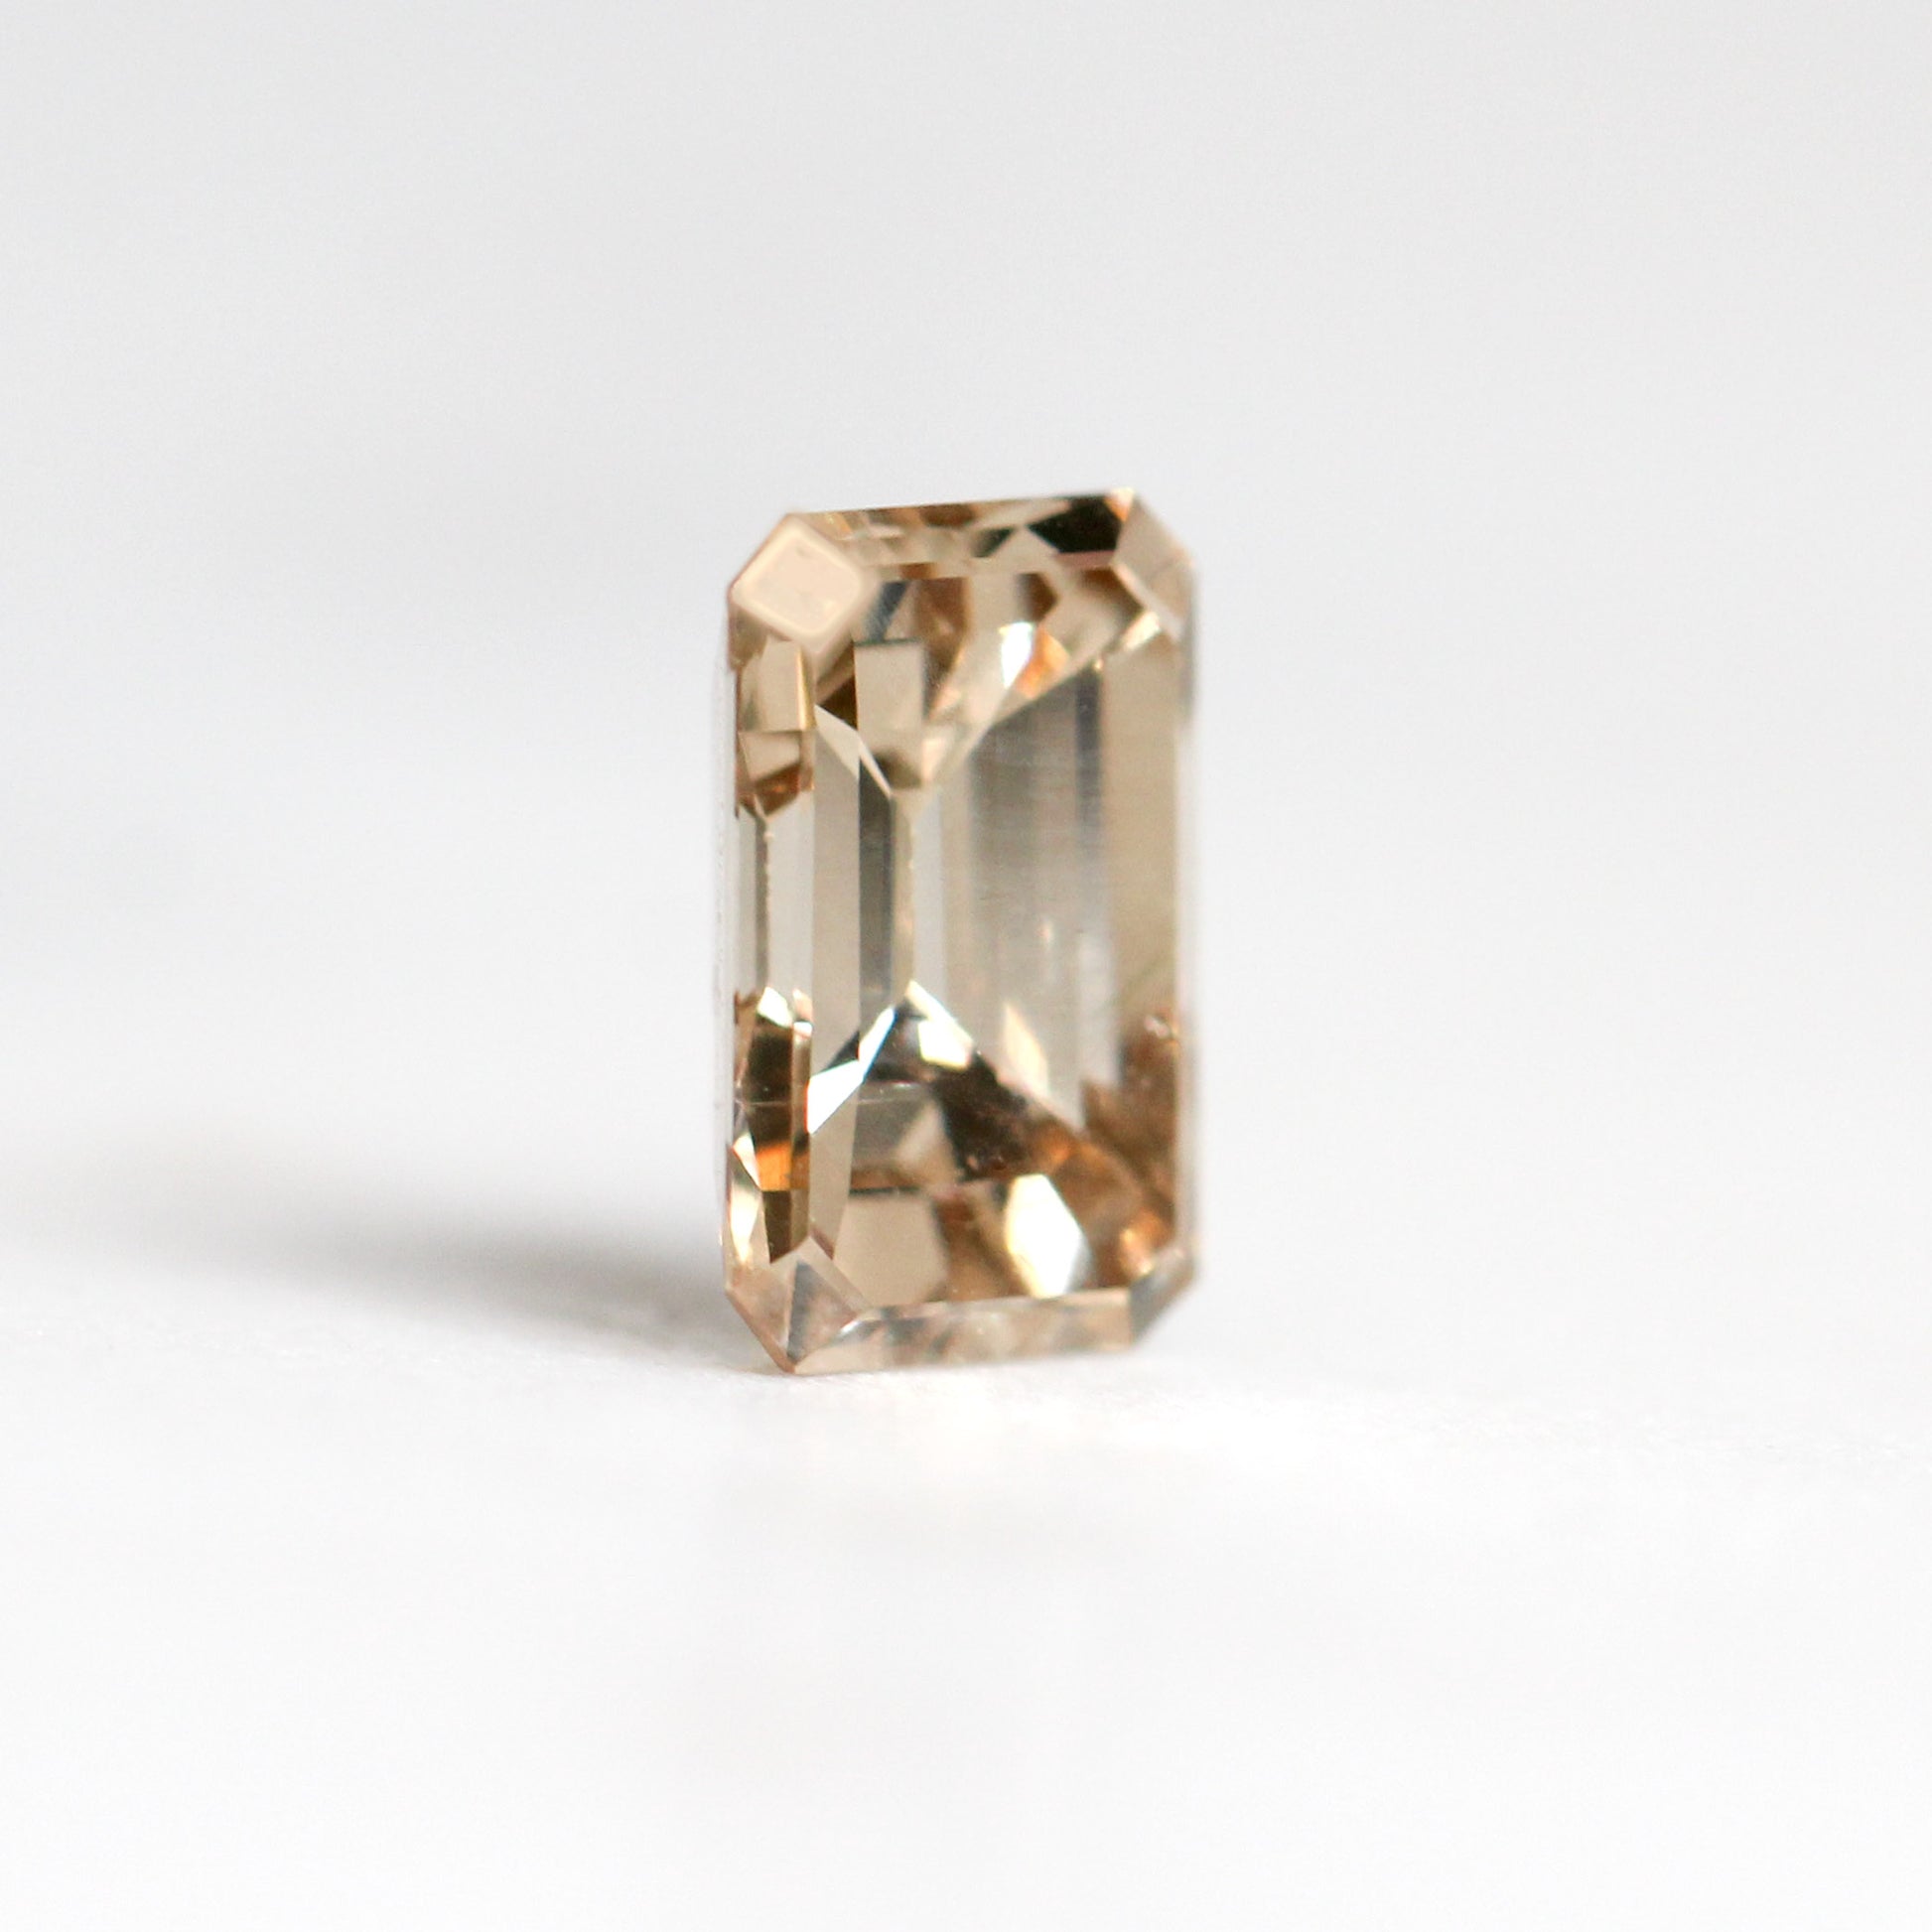 1.11 Carat IGL Certified Emerald Cut VVS2 Champagne Diamond for Custom Work - Inventory Code ECC111 - Midwinter Co. Alternative Bridal Rings and Modern Fine Jewelry